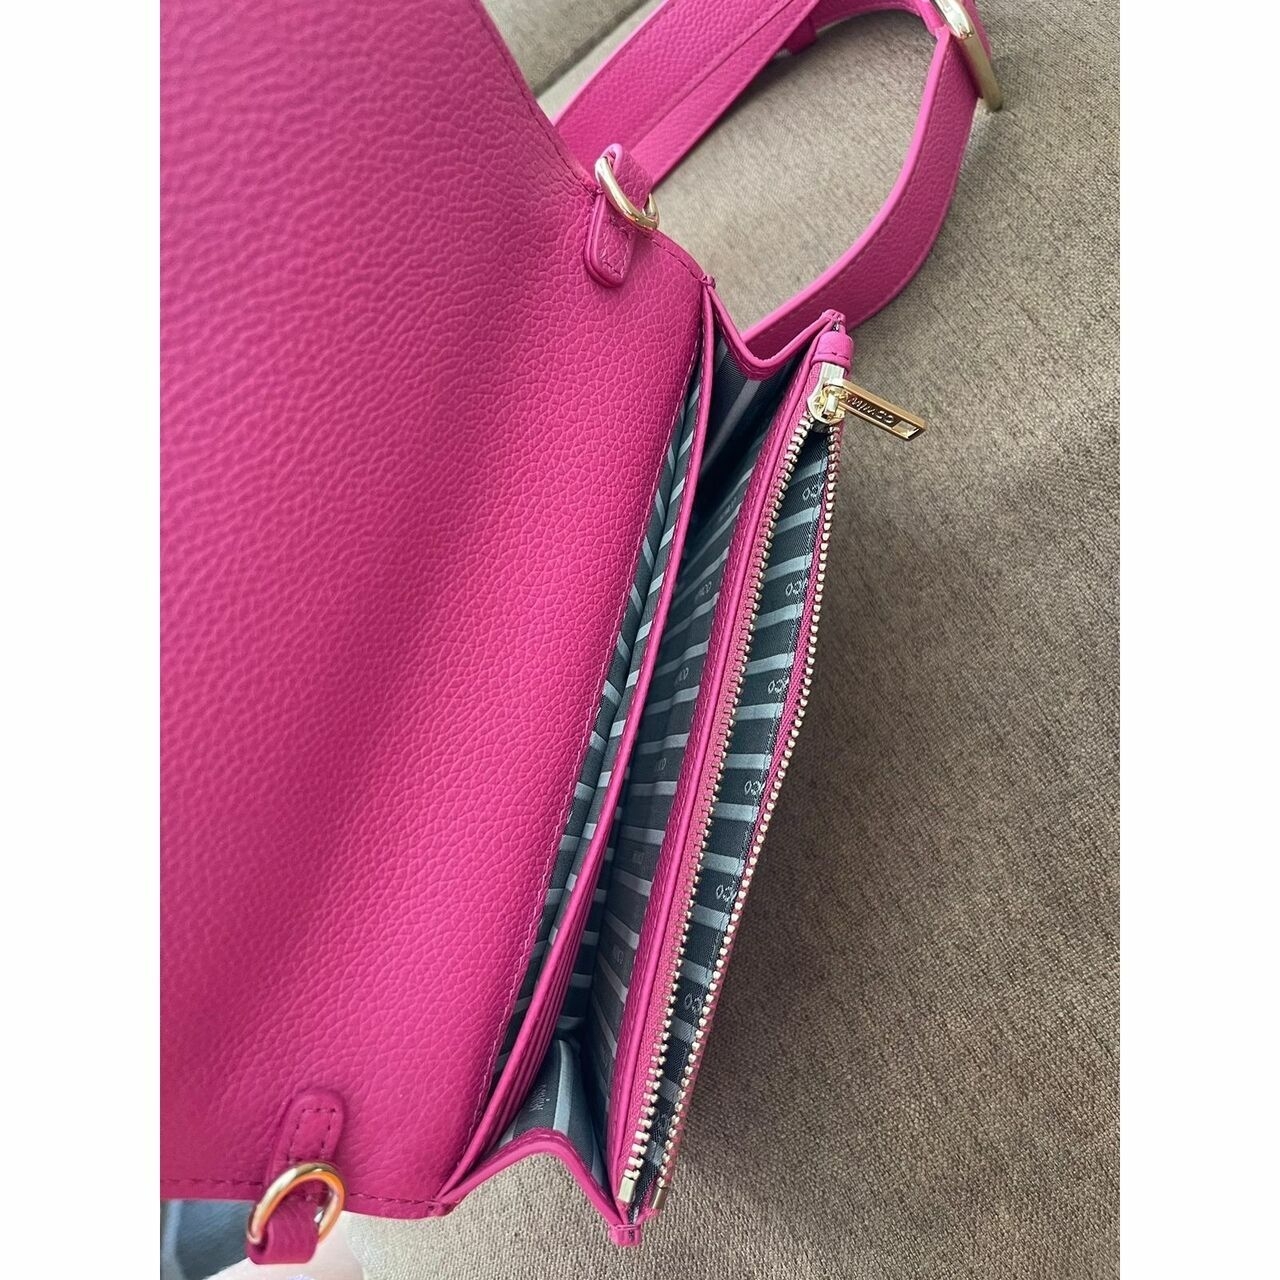 Mimco Pink Sling Bag